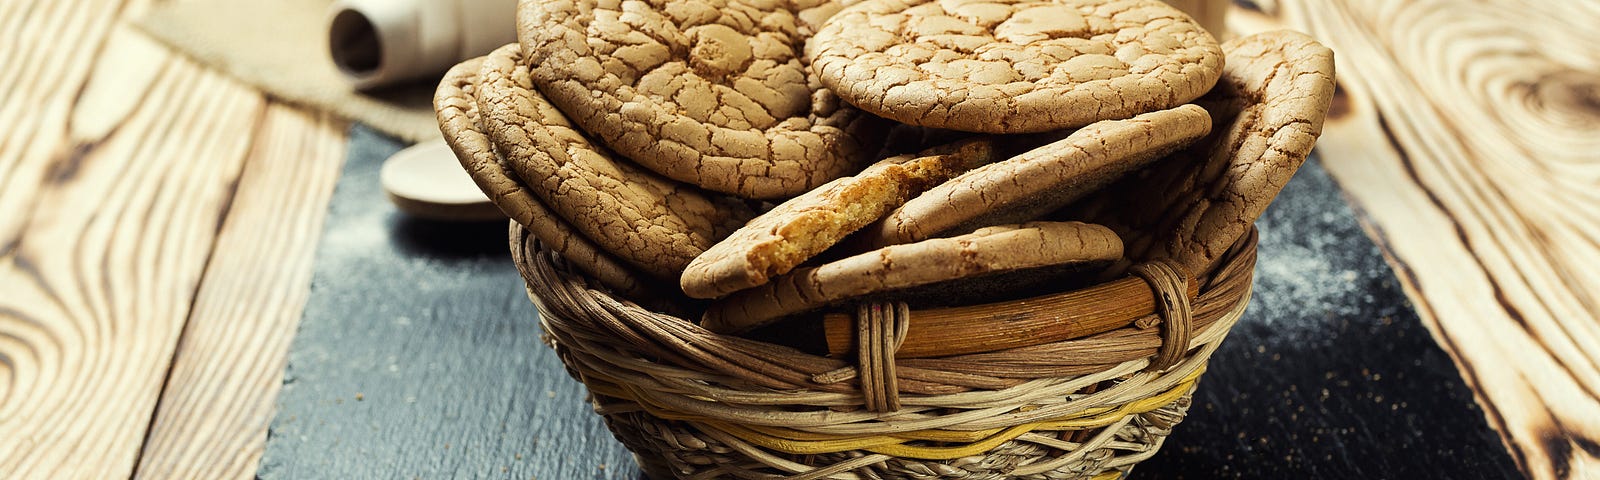 Cookies in a basket